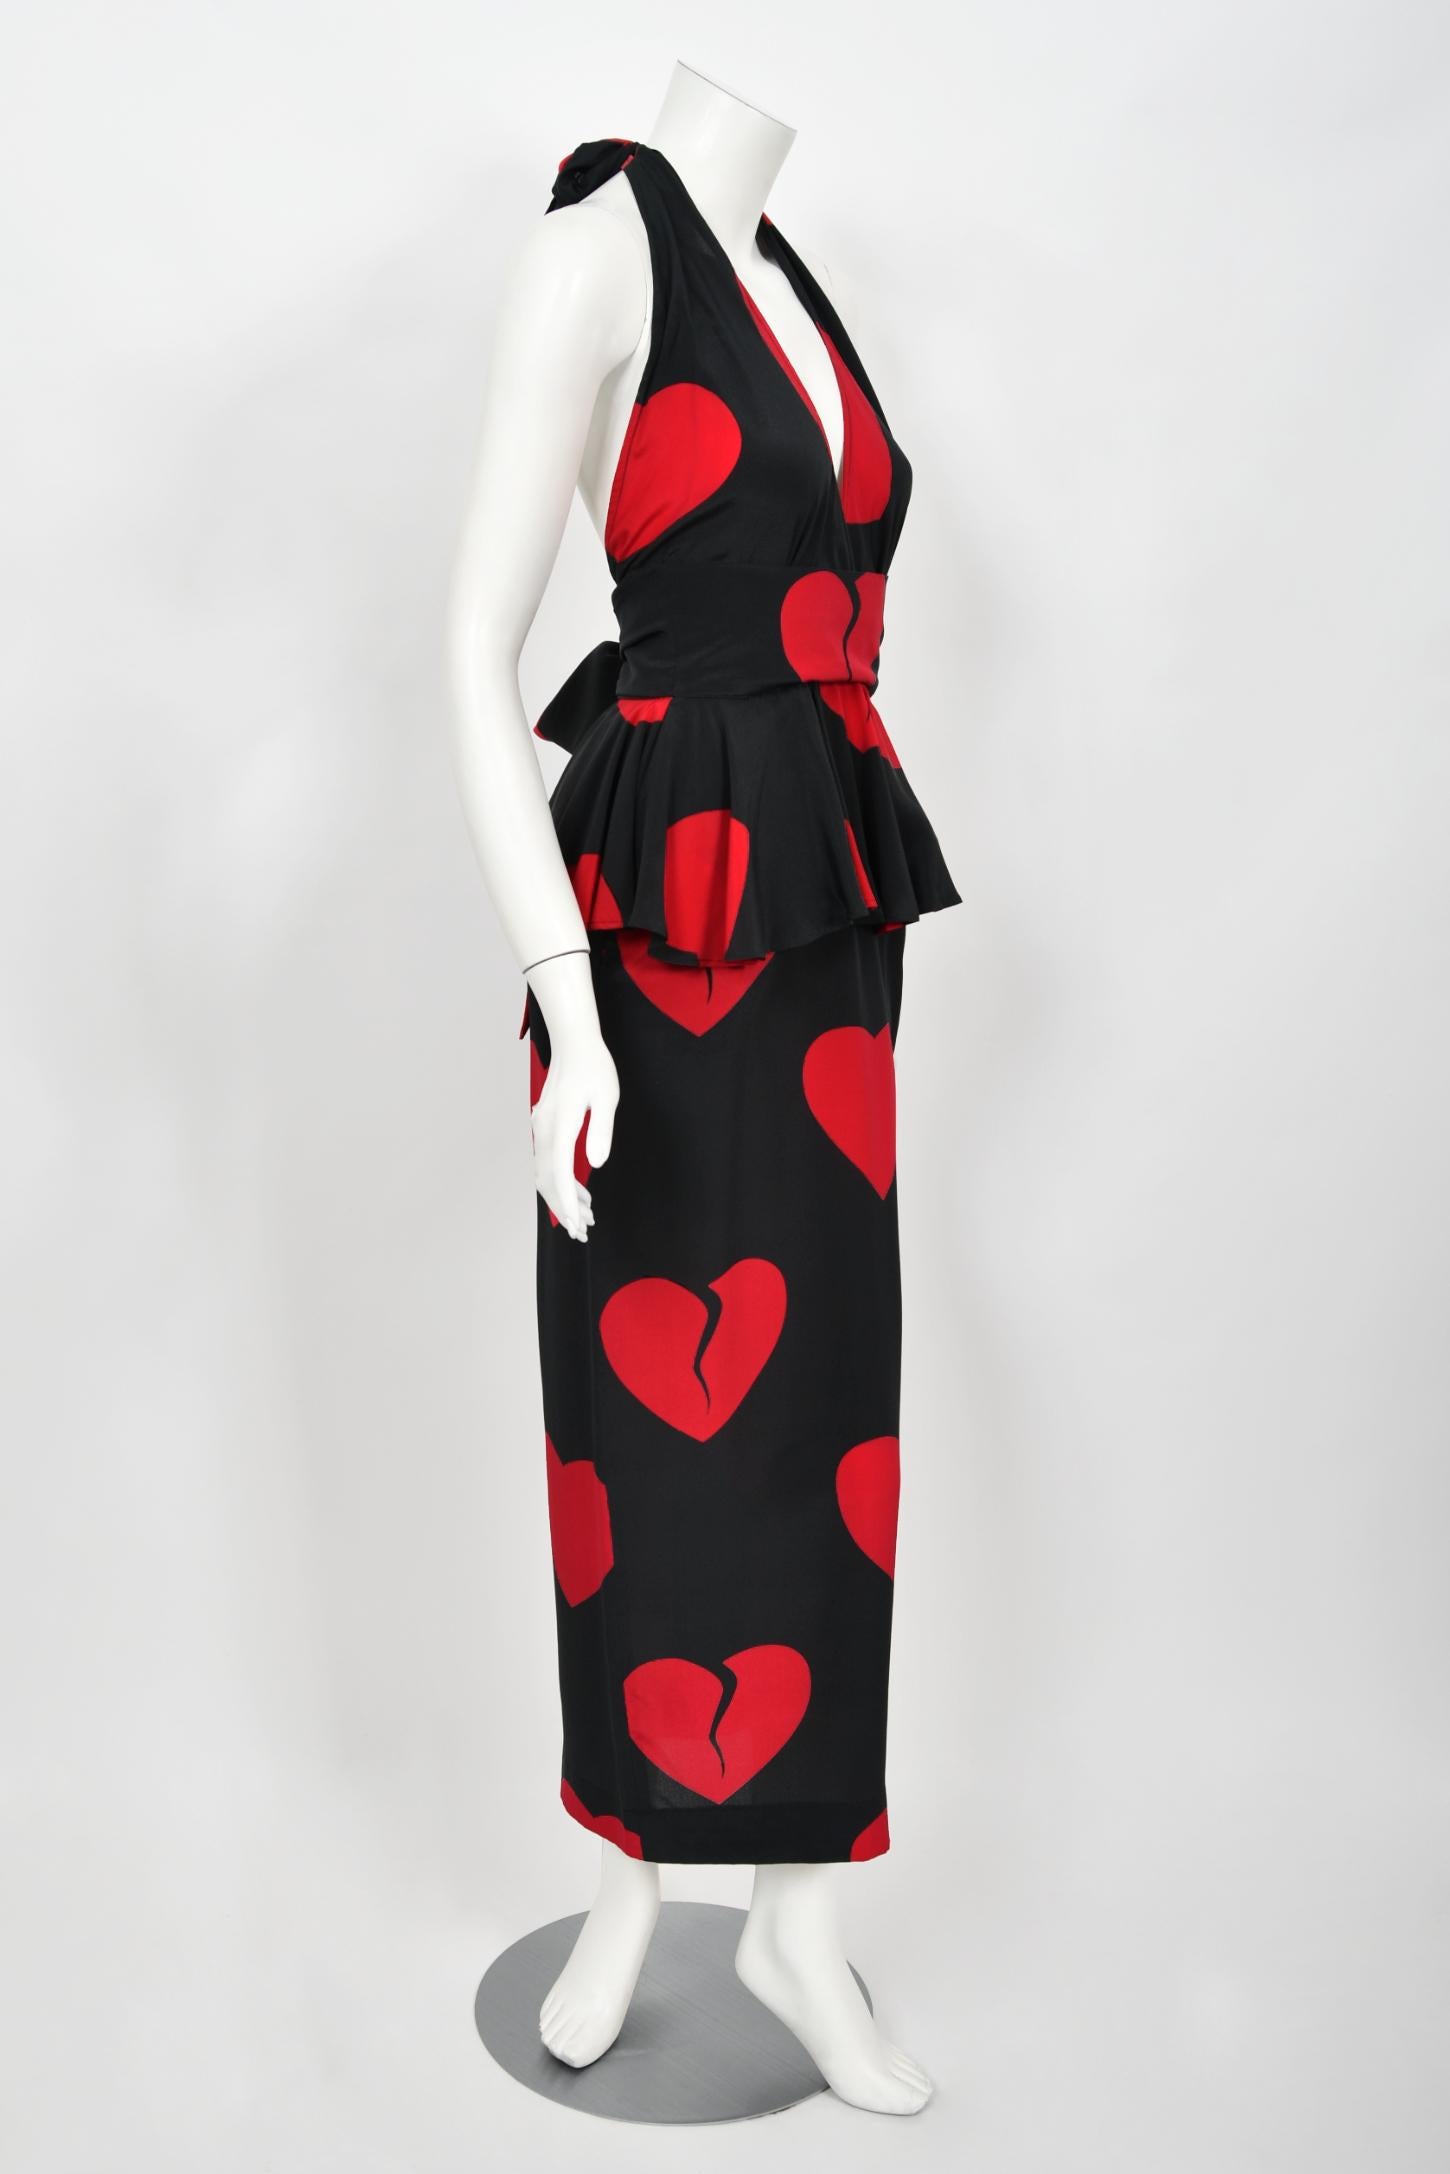 Robe convertible Moschino Couture documentée « Heartbreaker » en soie imprimée, 1994  en vente 6